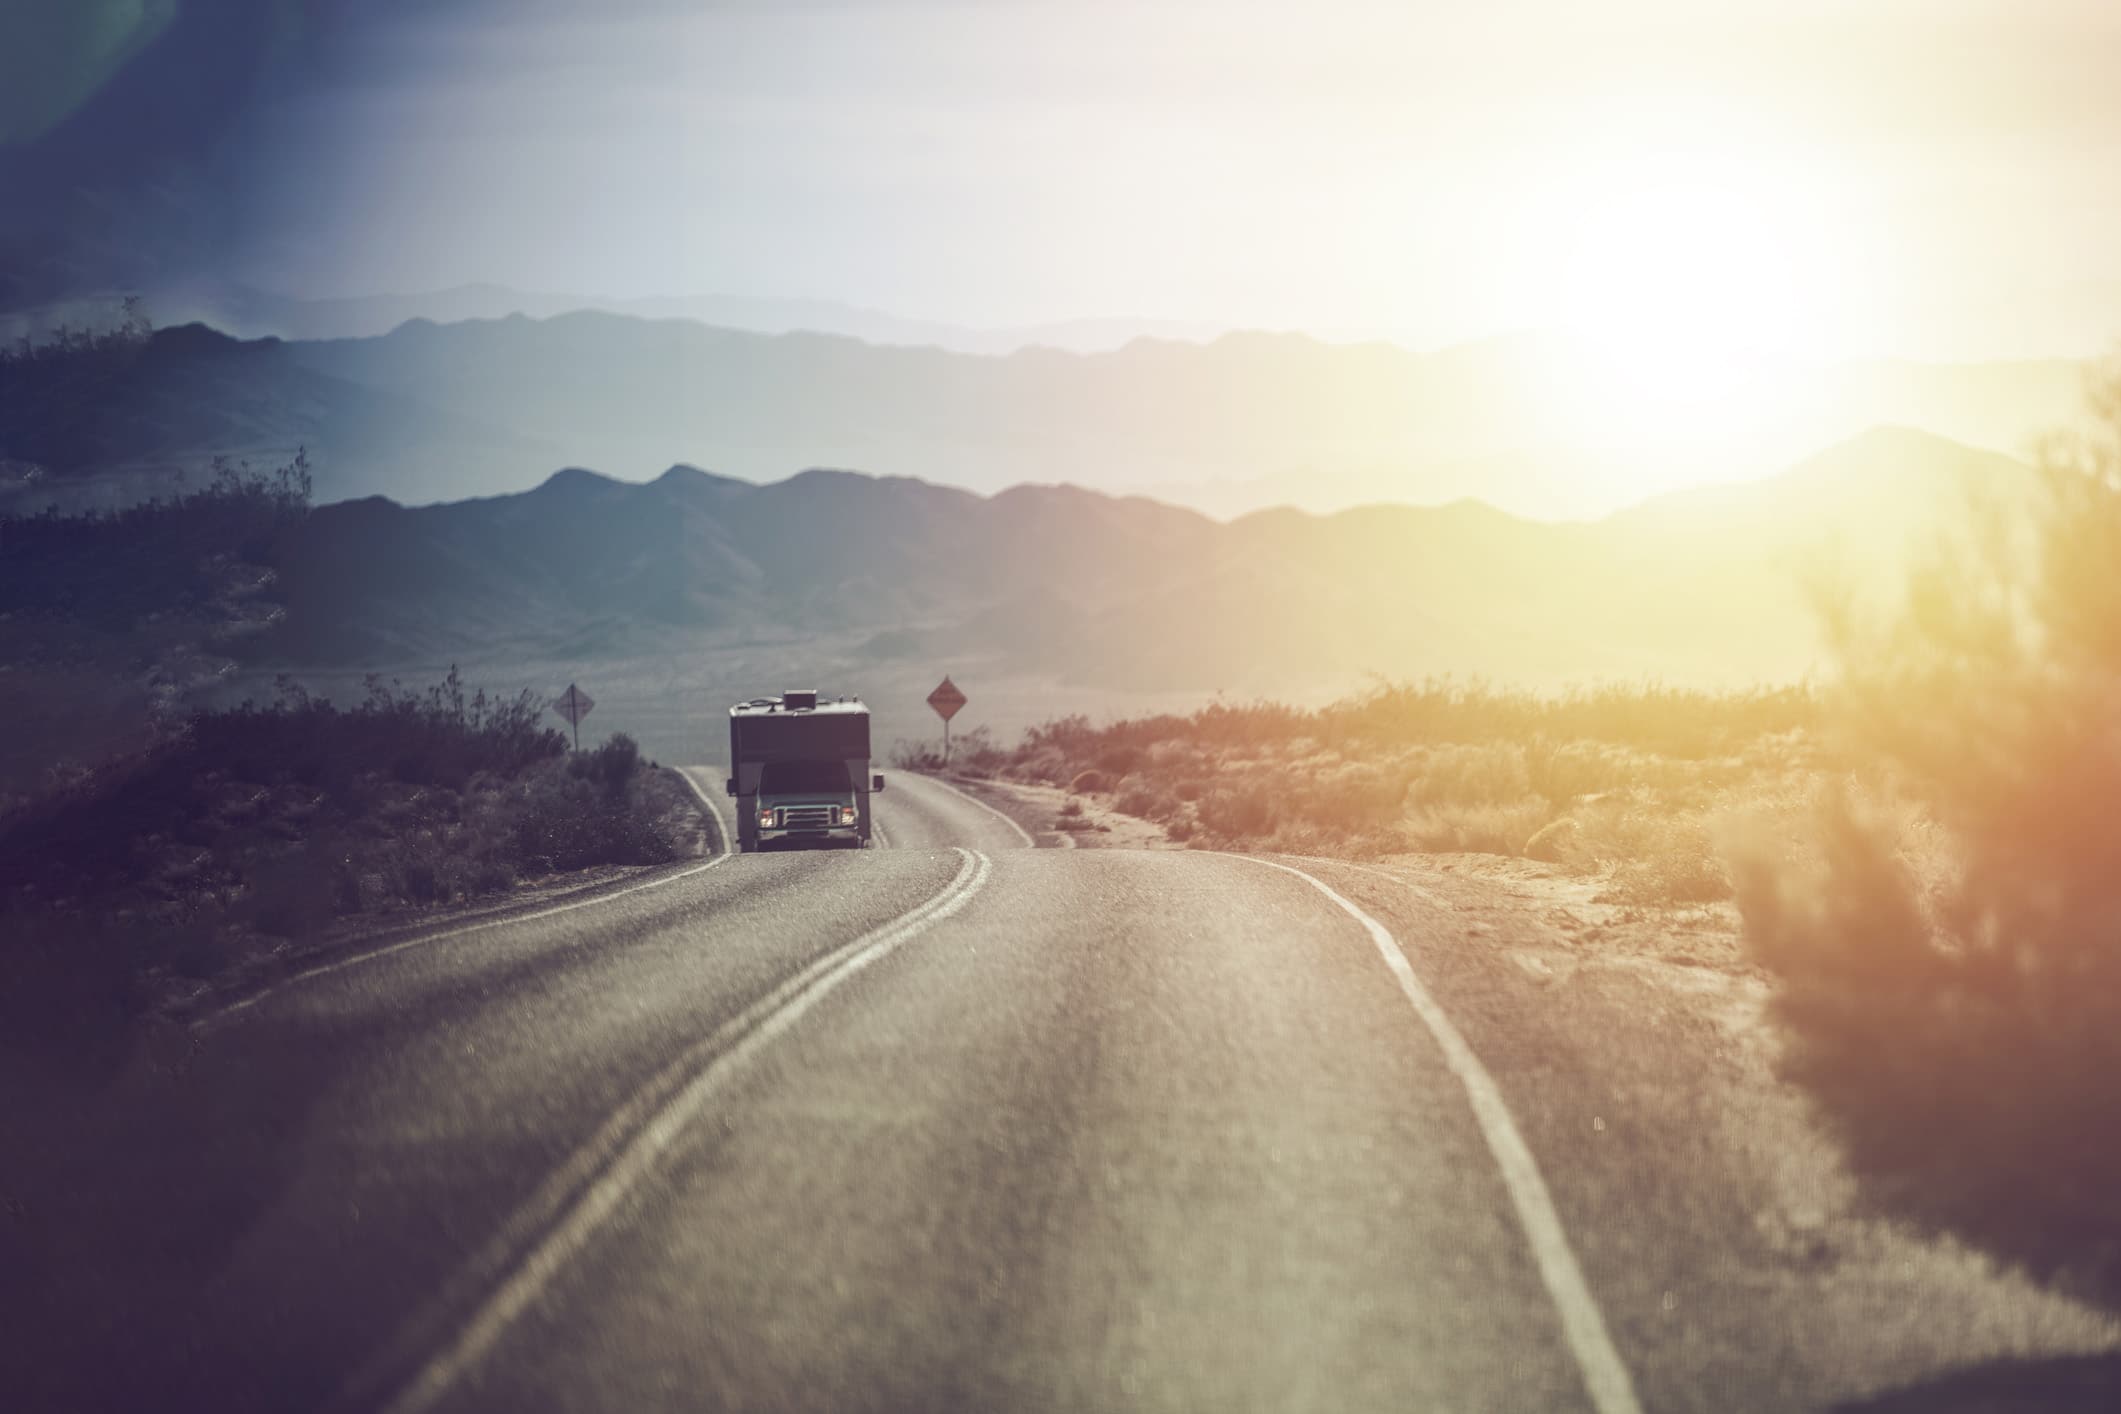 Motorhome driving on a sun-baked desert road.